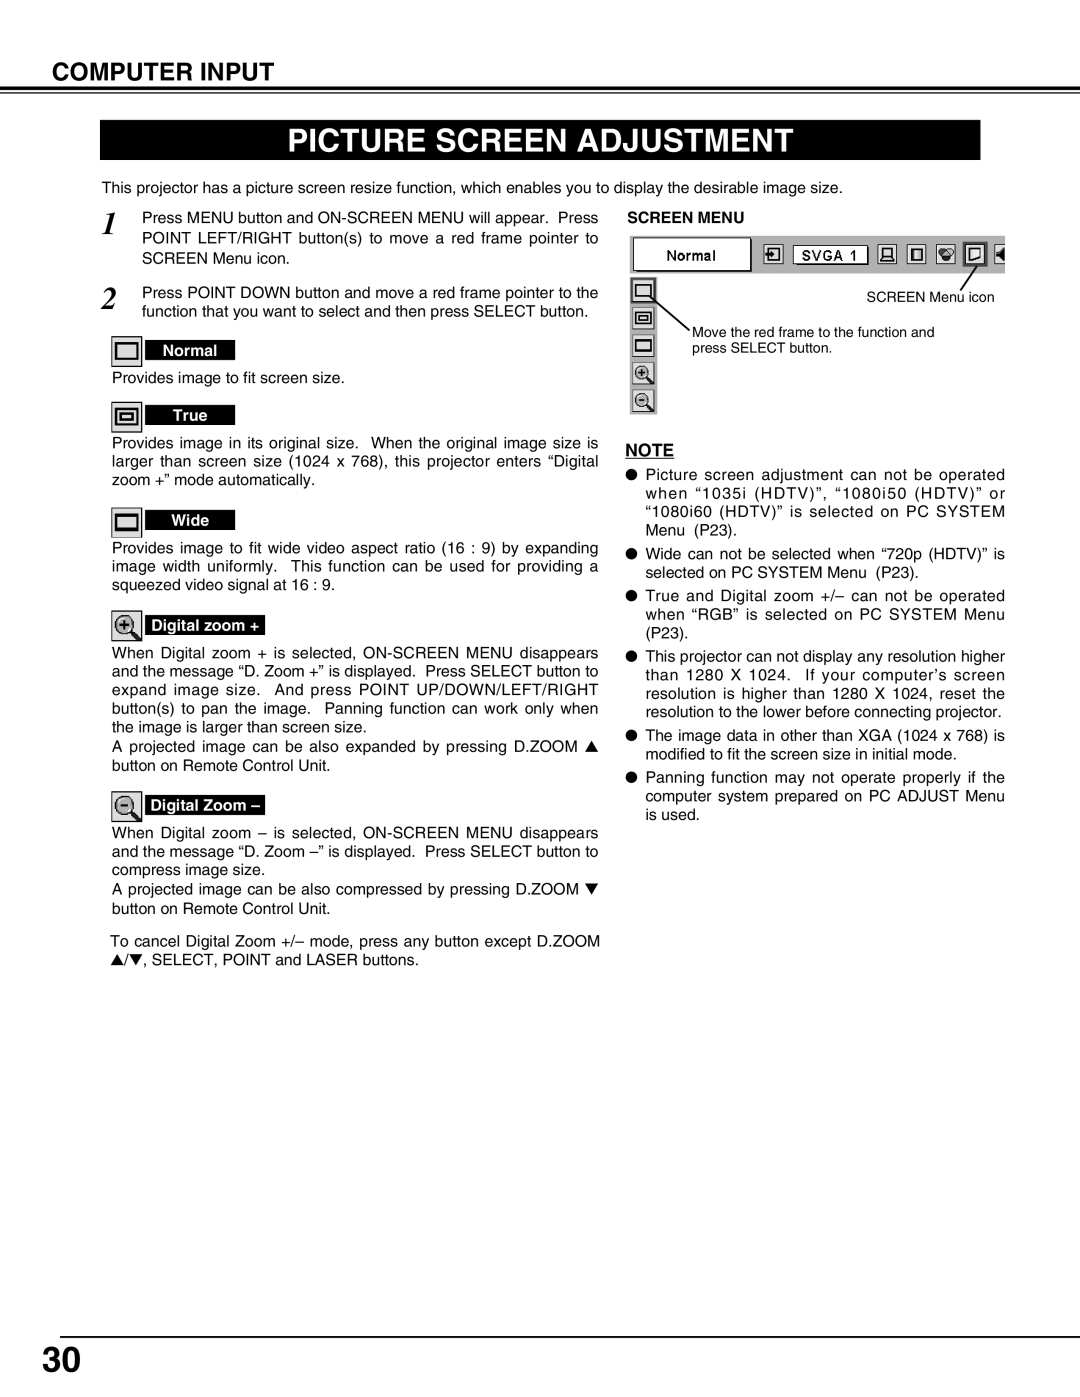 Christie Digital Systems 38-VIV207-01 user manual Picture Screen Adjustment, Computer Input, Screen Menu 